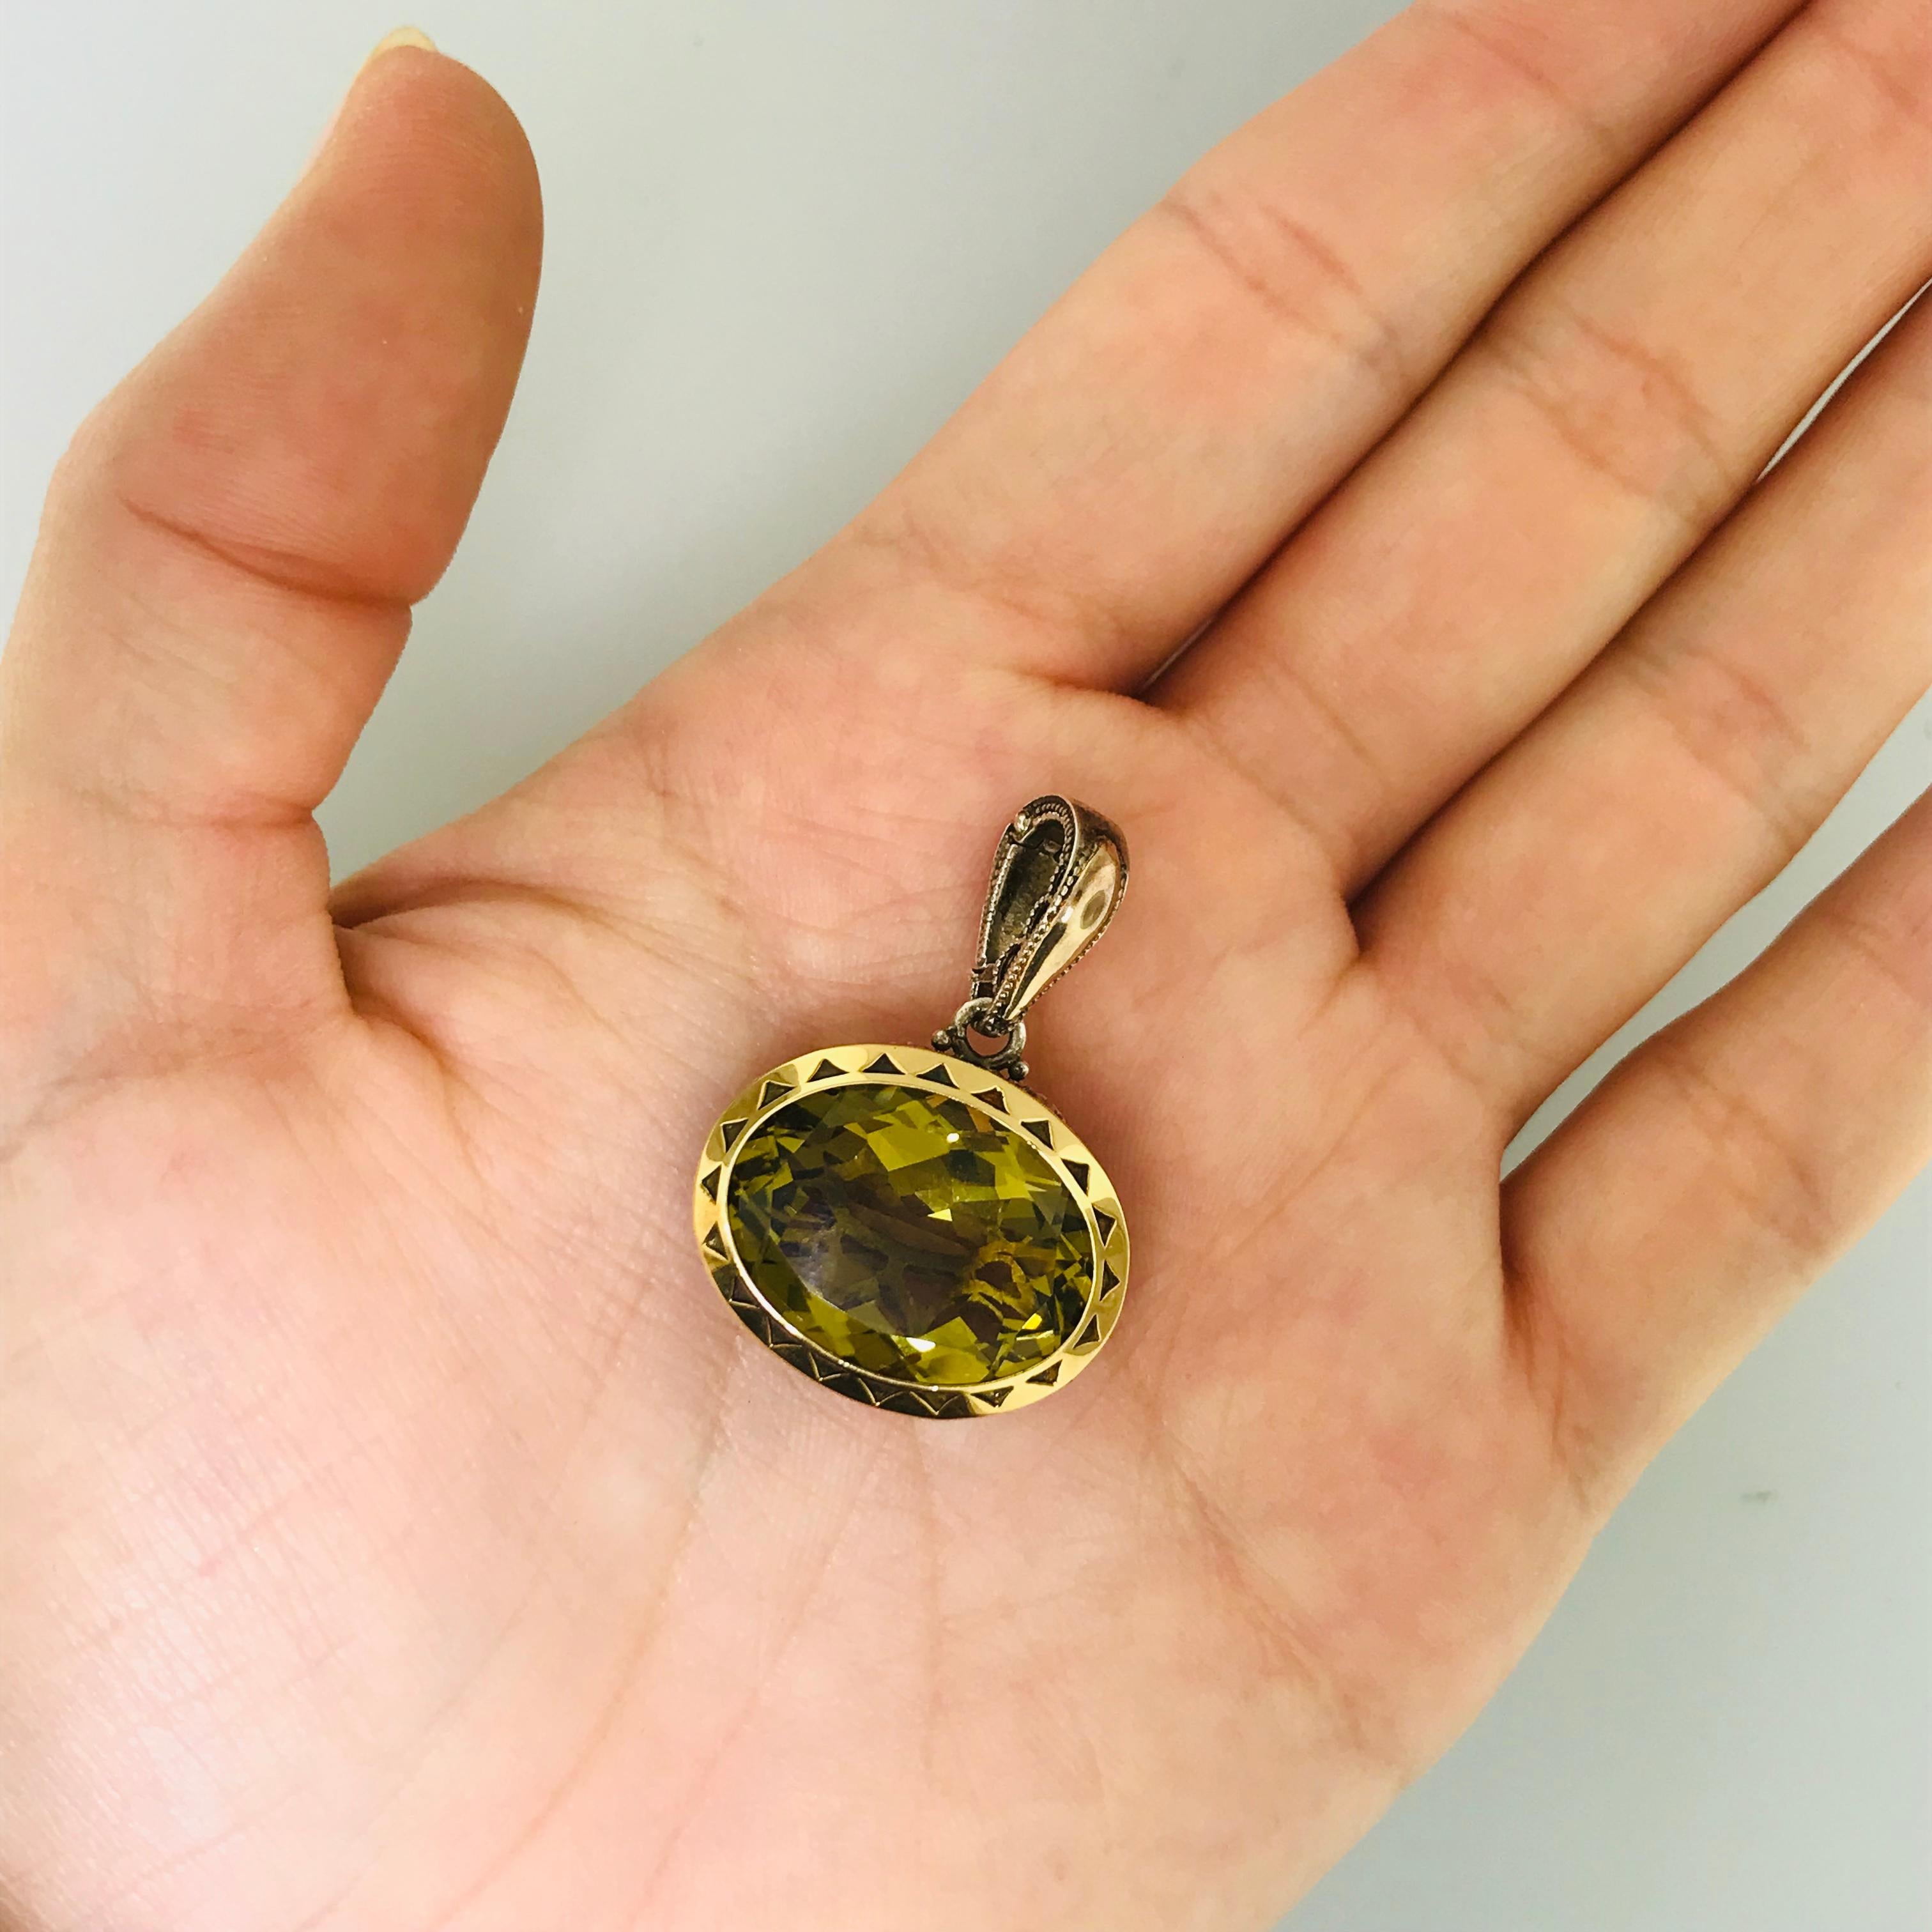 This original Tacori diamond & olive quartz pendant enhancer is a Tacori and comes with its authenticity papers. The pendant comes with a Tacori jewelry pouch, the Tacori 18K 925 